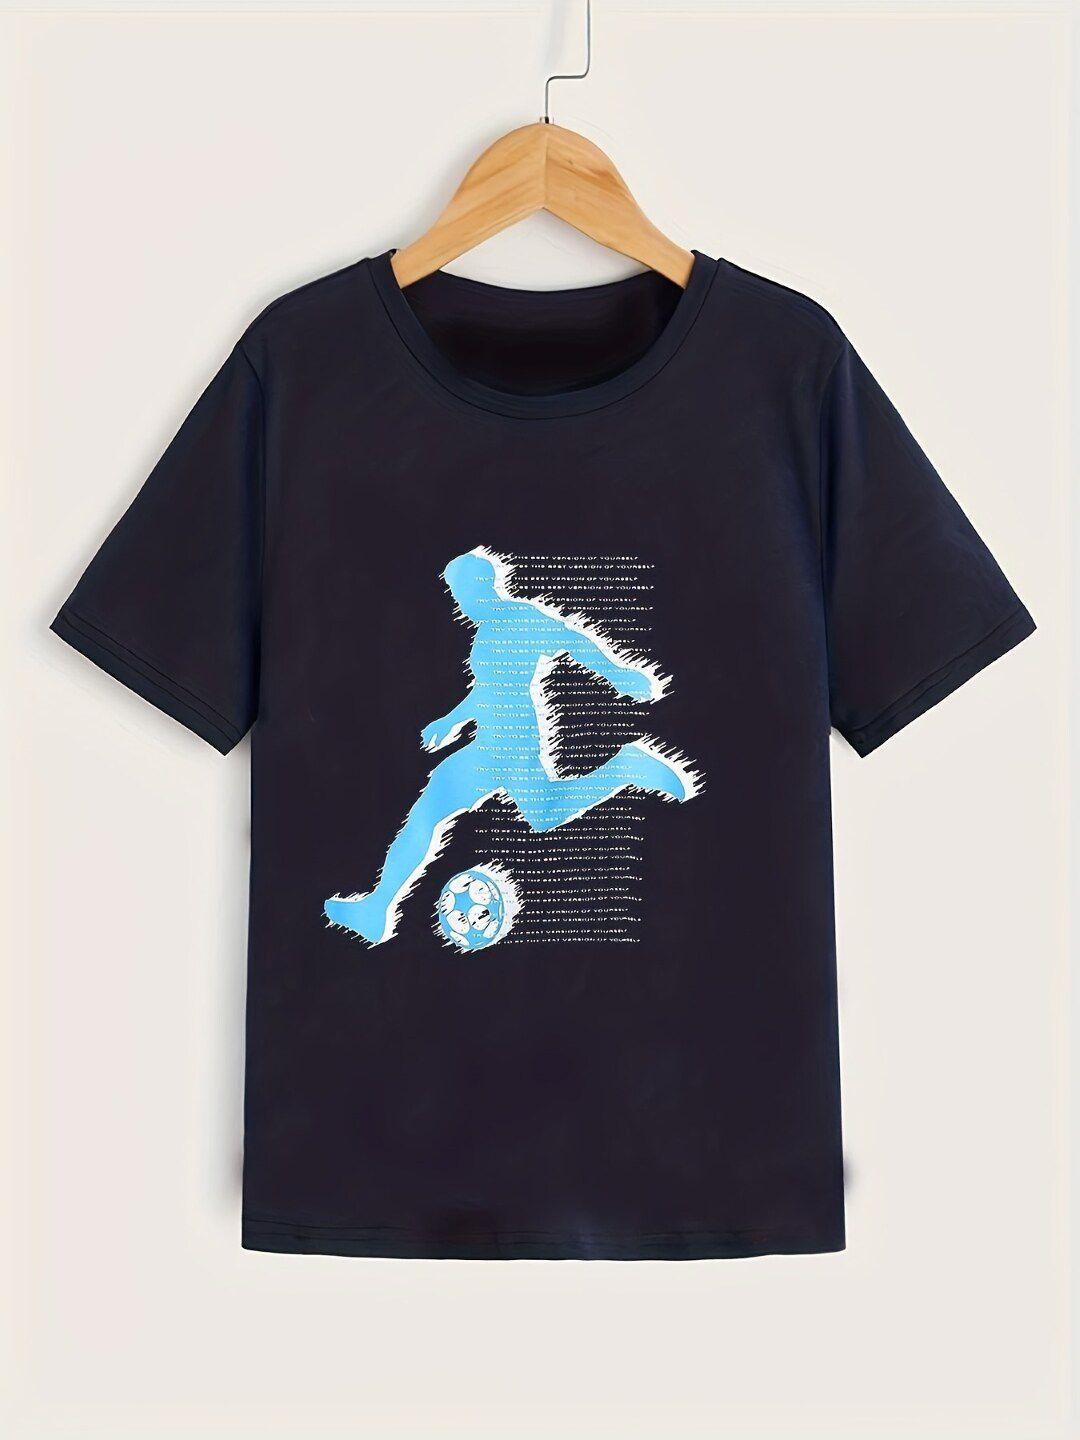 stylecast boys navy blue graphic printed regular fit t-shirt